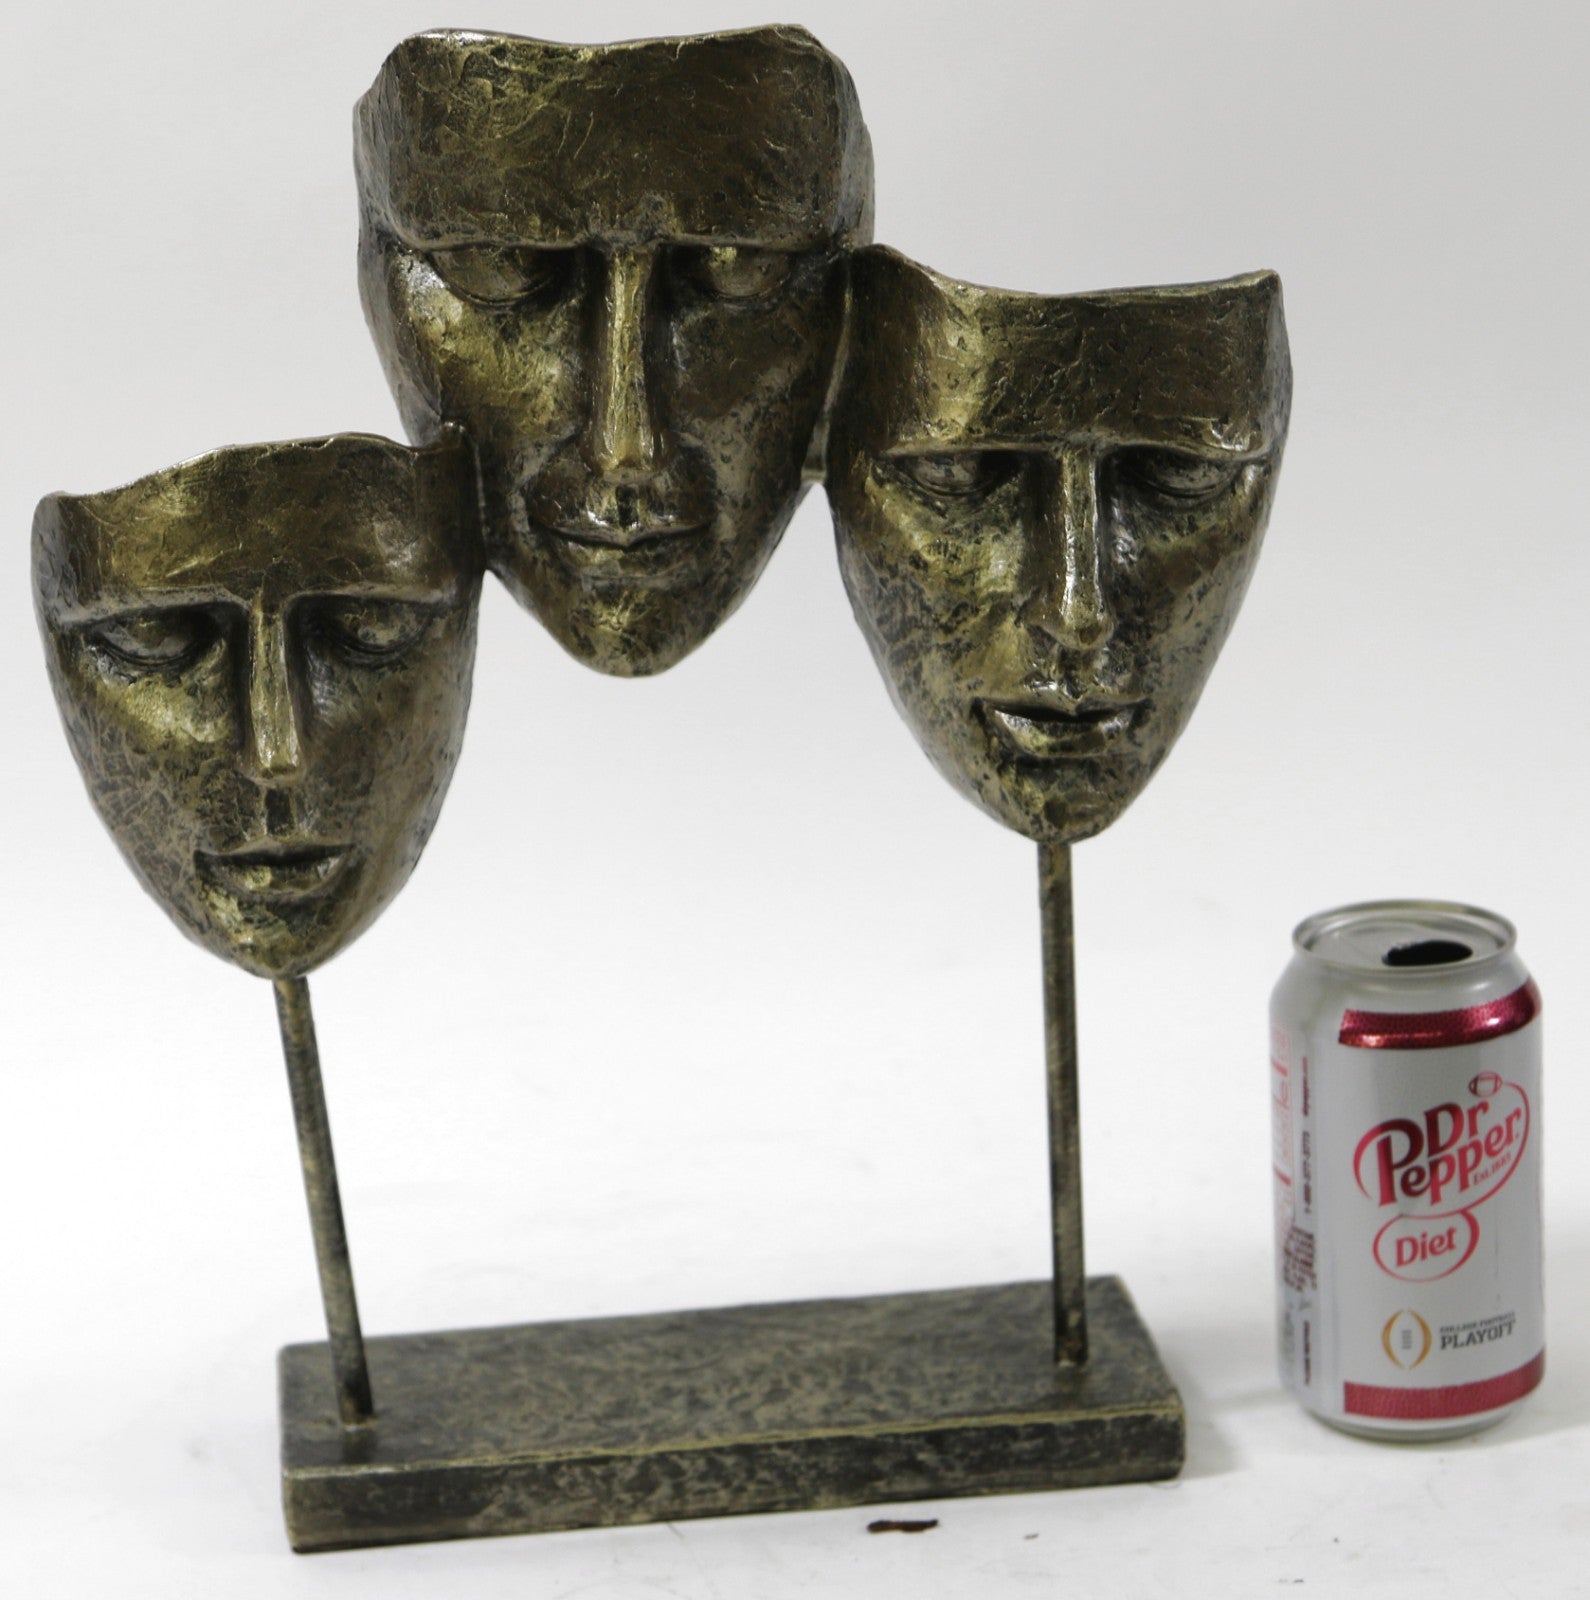 Hand face statue 3D Model in Sculpture Cold Cast Figurine Detailed Artwork Sale